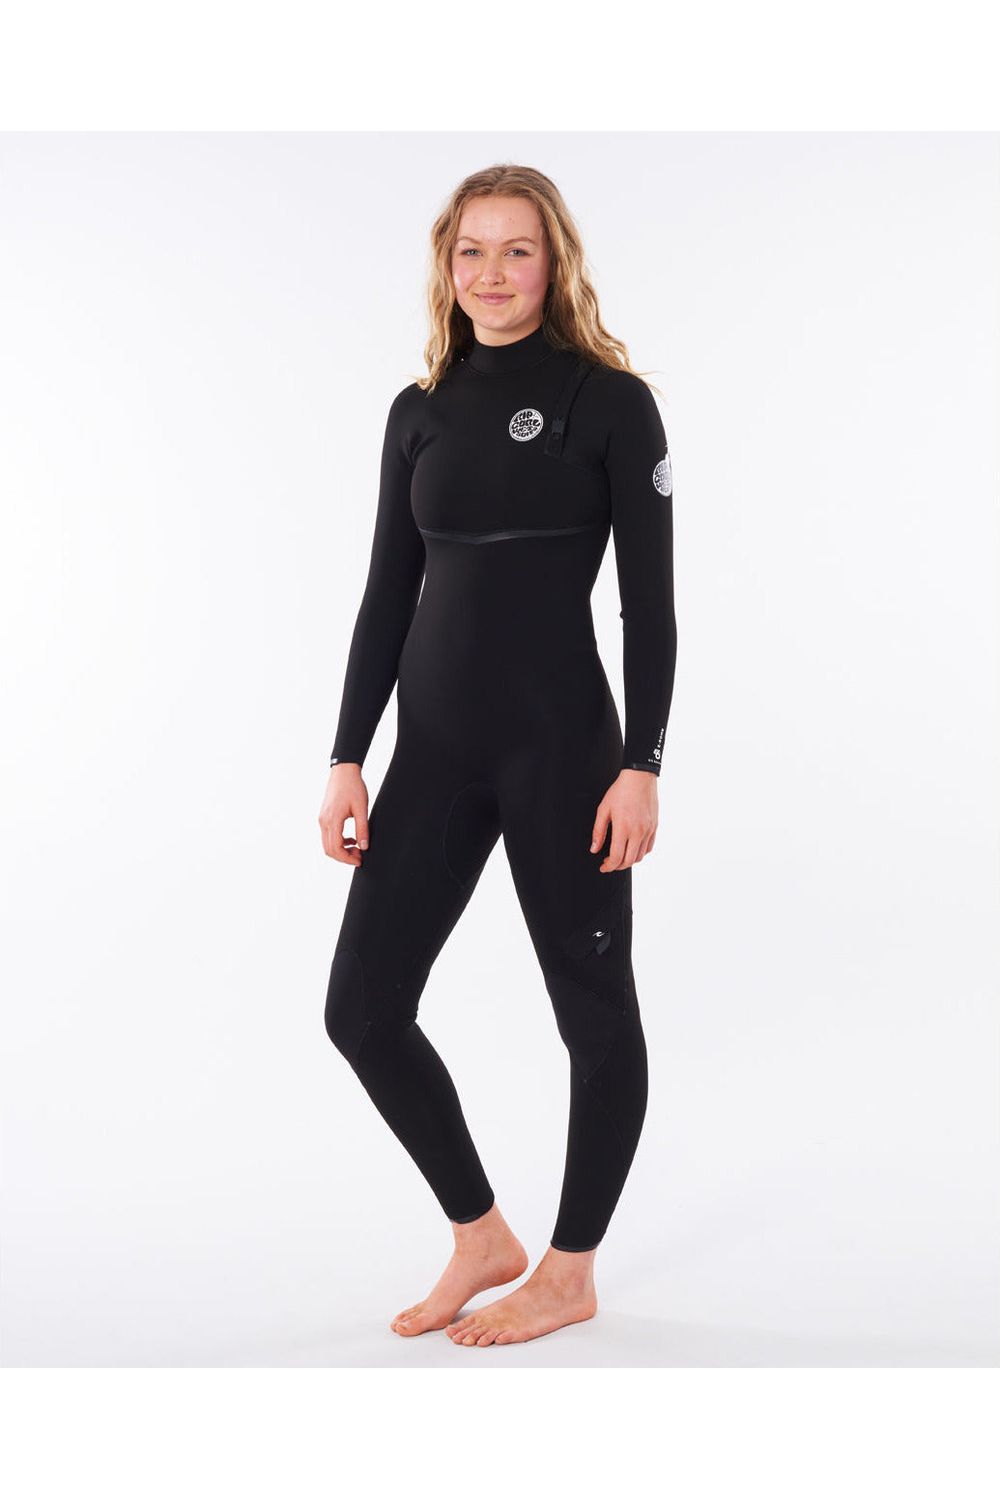 Womens E Bomb 5/3 Zip Free wetsuit